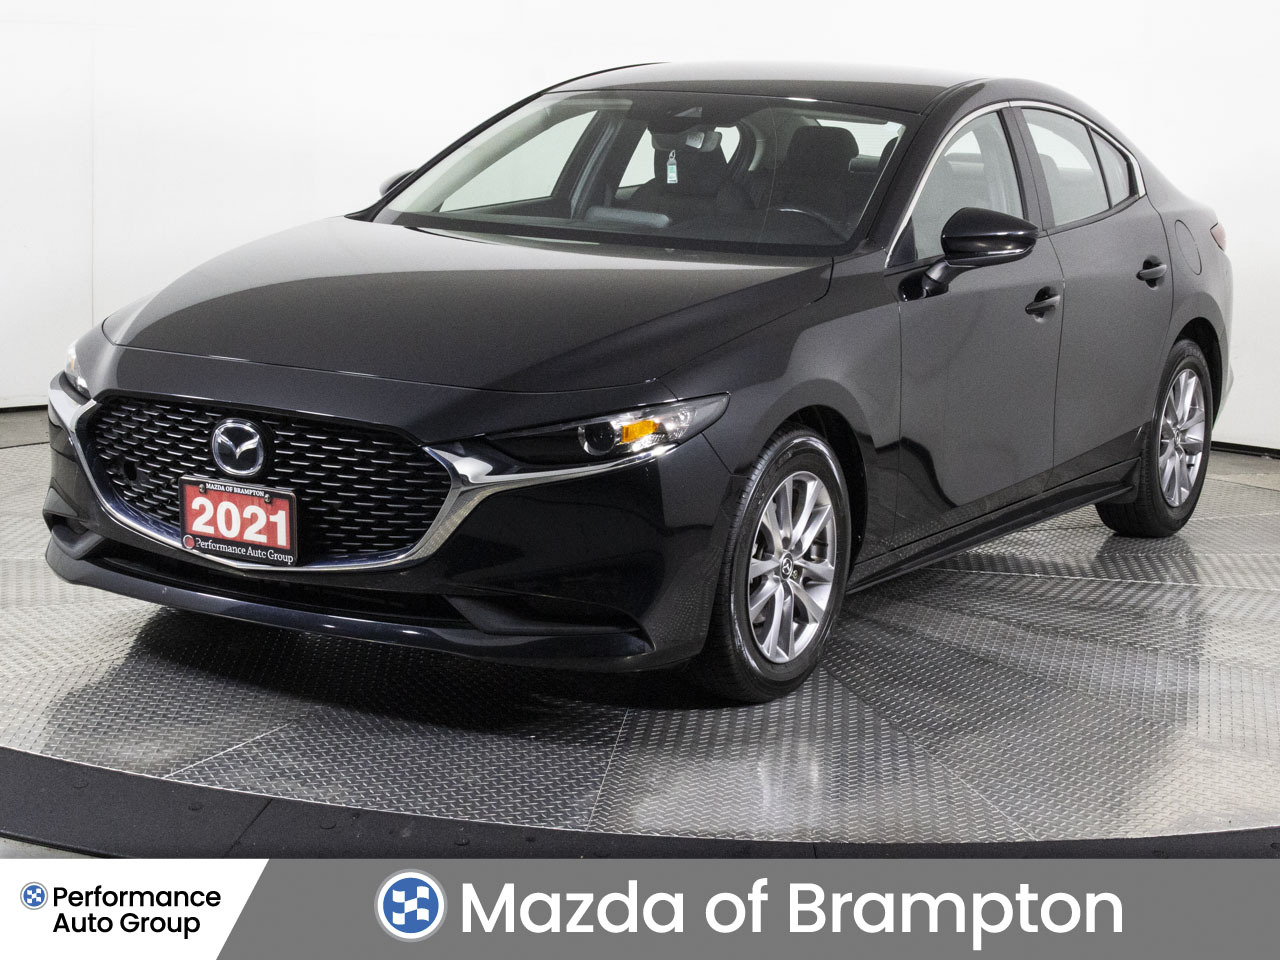 2021 Mazda Mazda3 GS FWD SEDAN HTD SEATS+STEERING REAR CAM 1 OWNER!